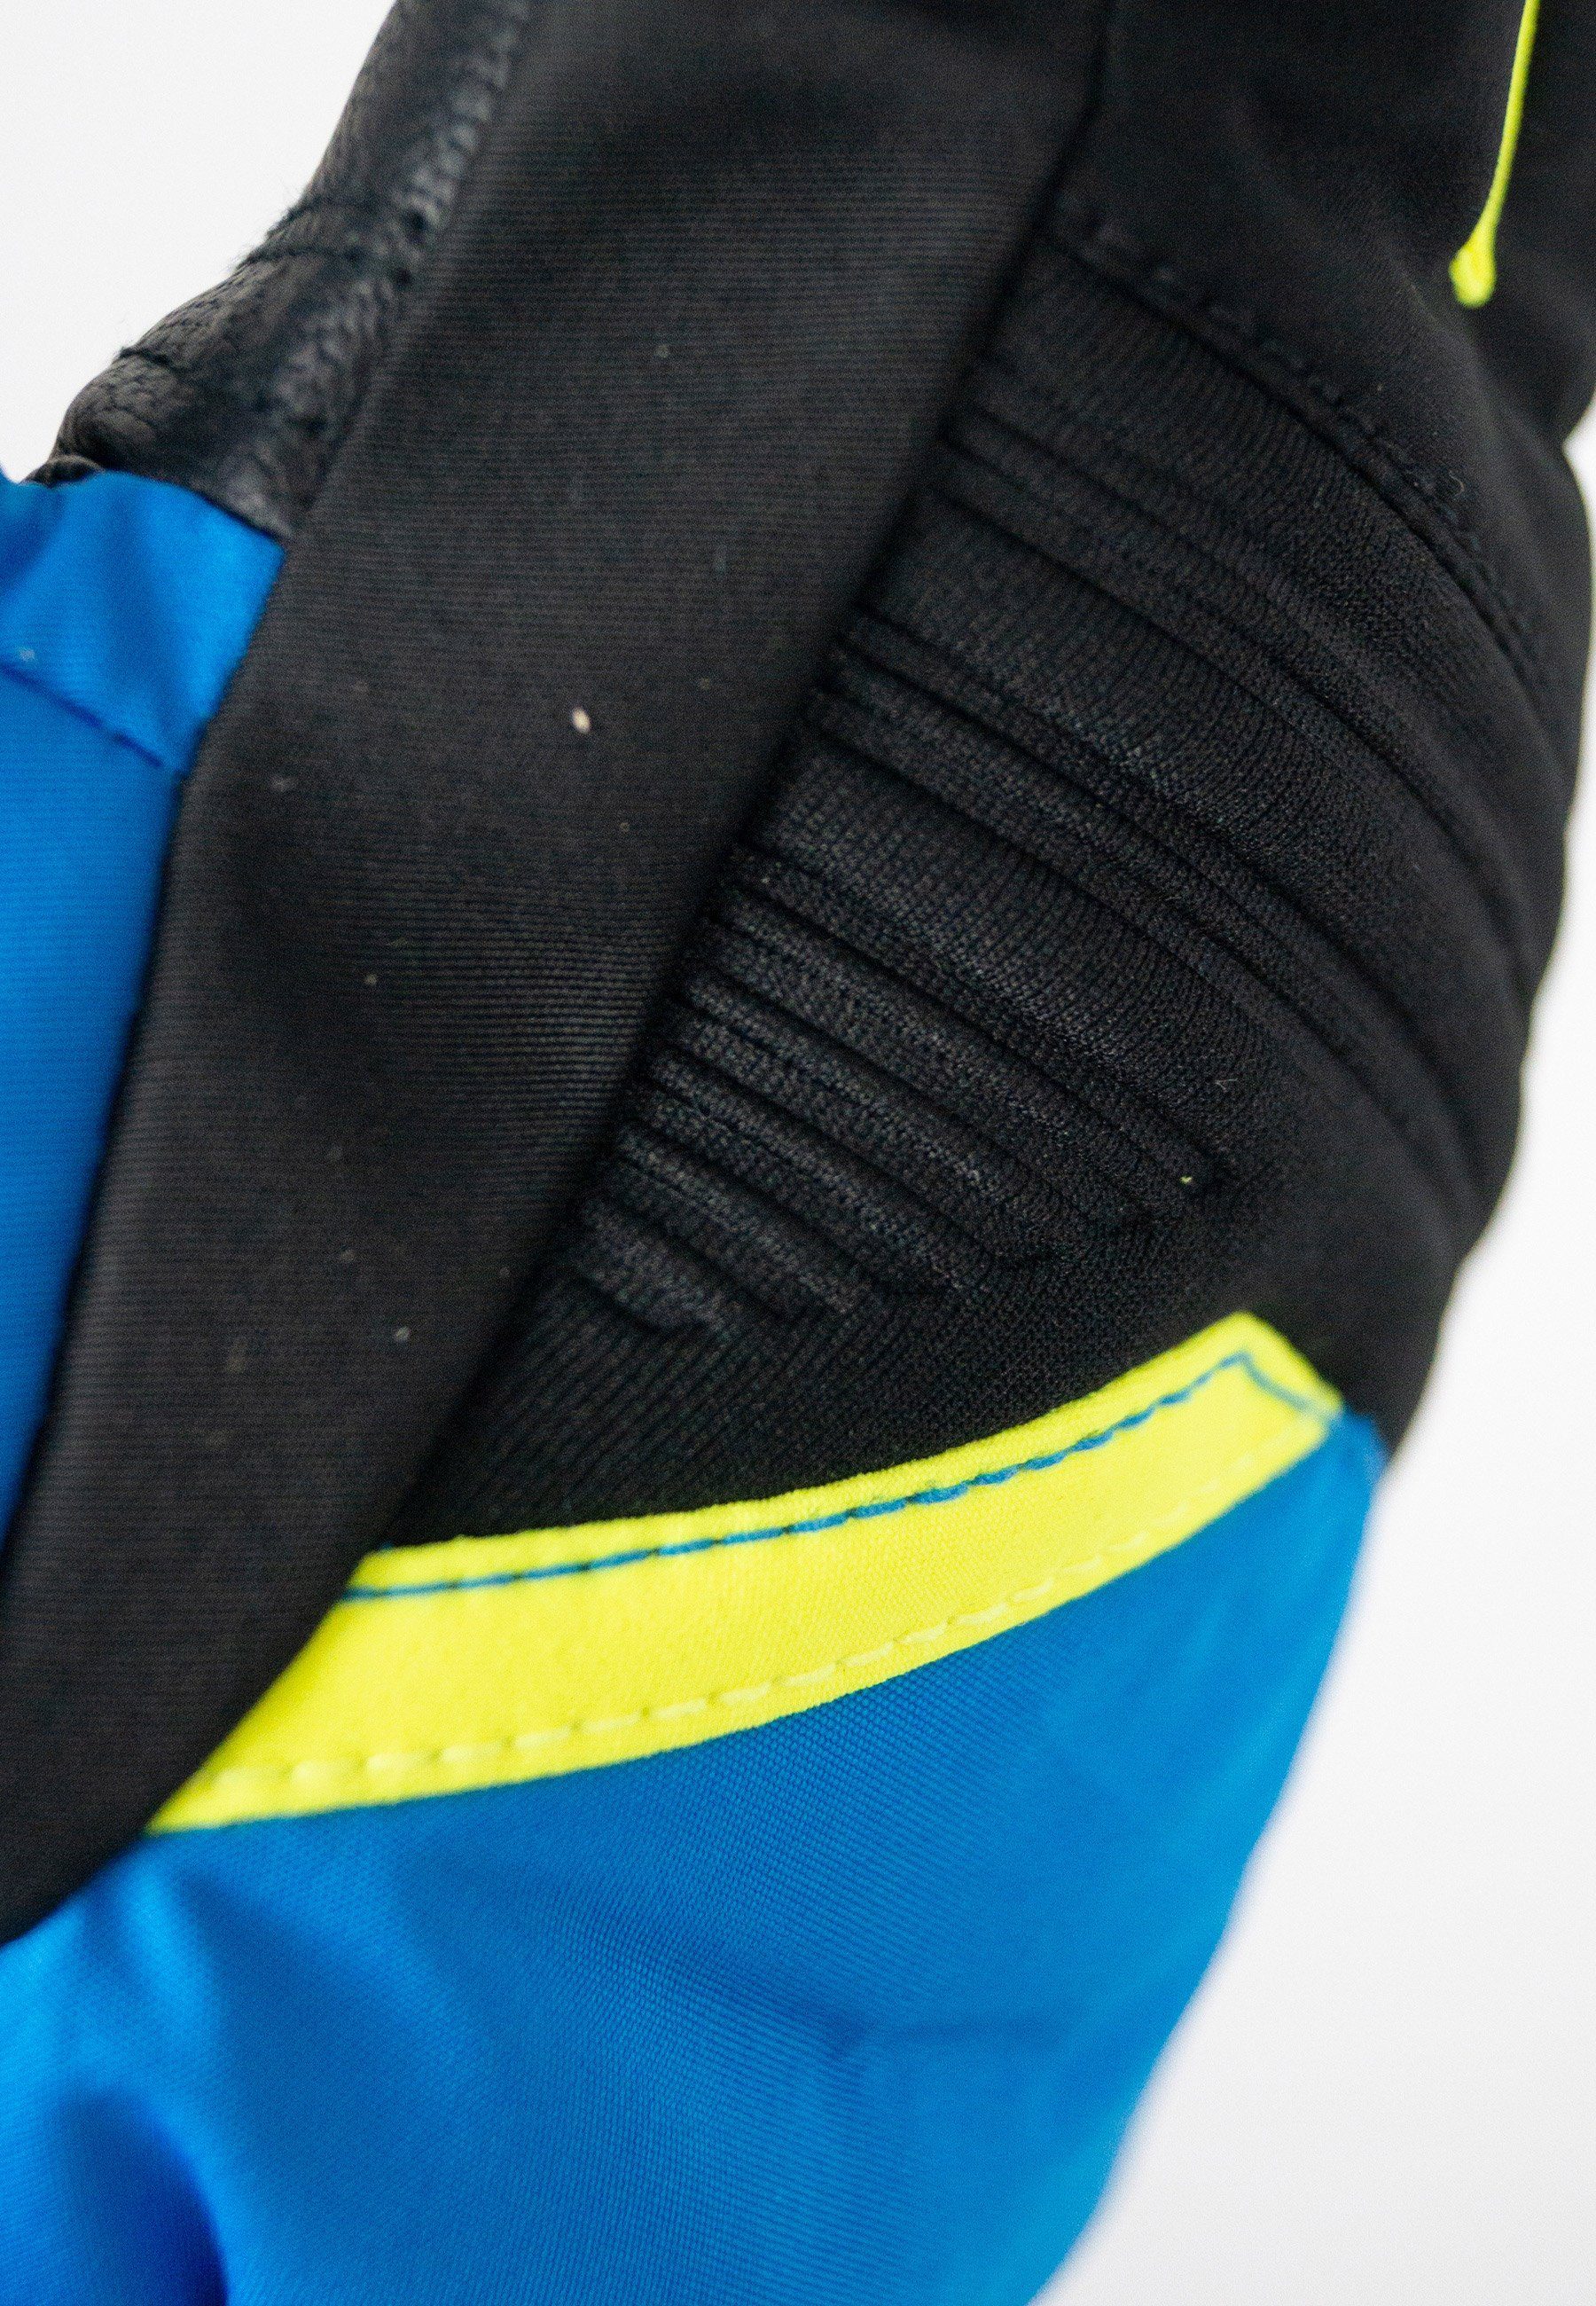 XT Reusch in blau-schwarz Design Bradley Skihandschuhe schickem R-TEX®